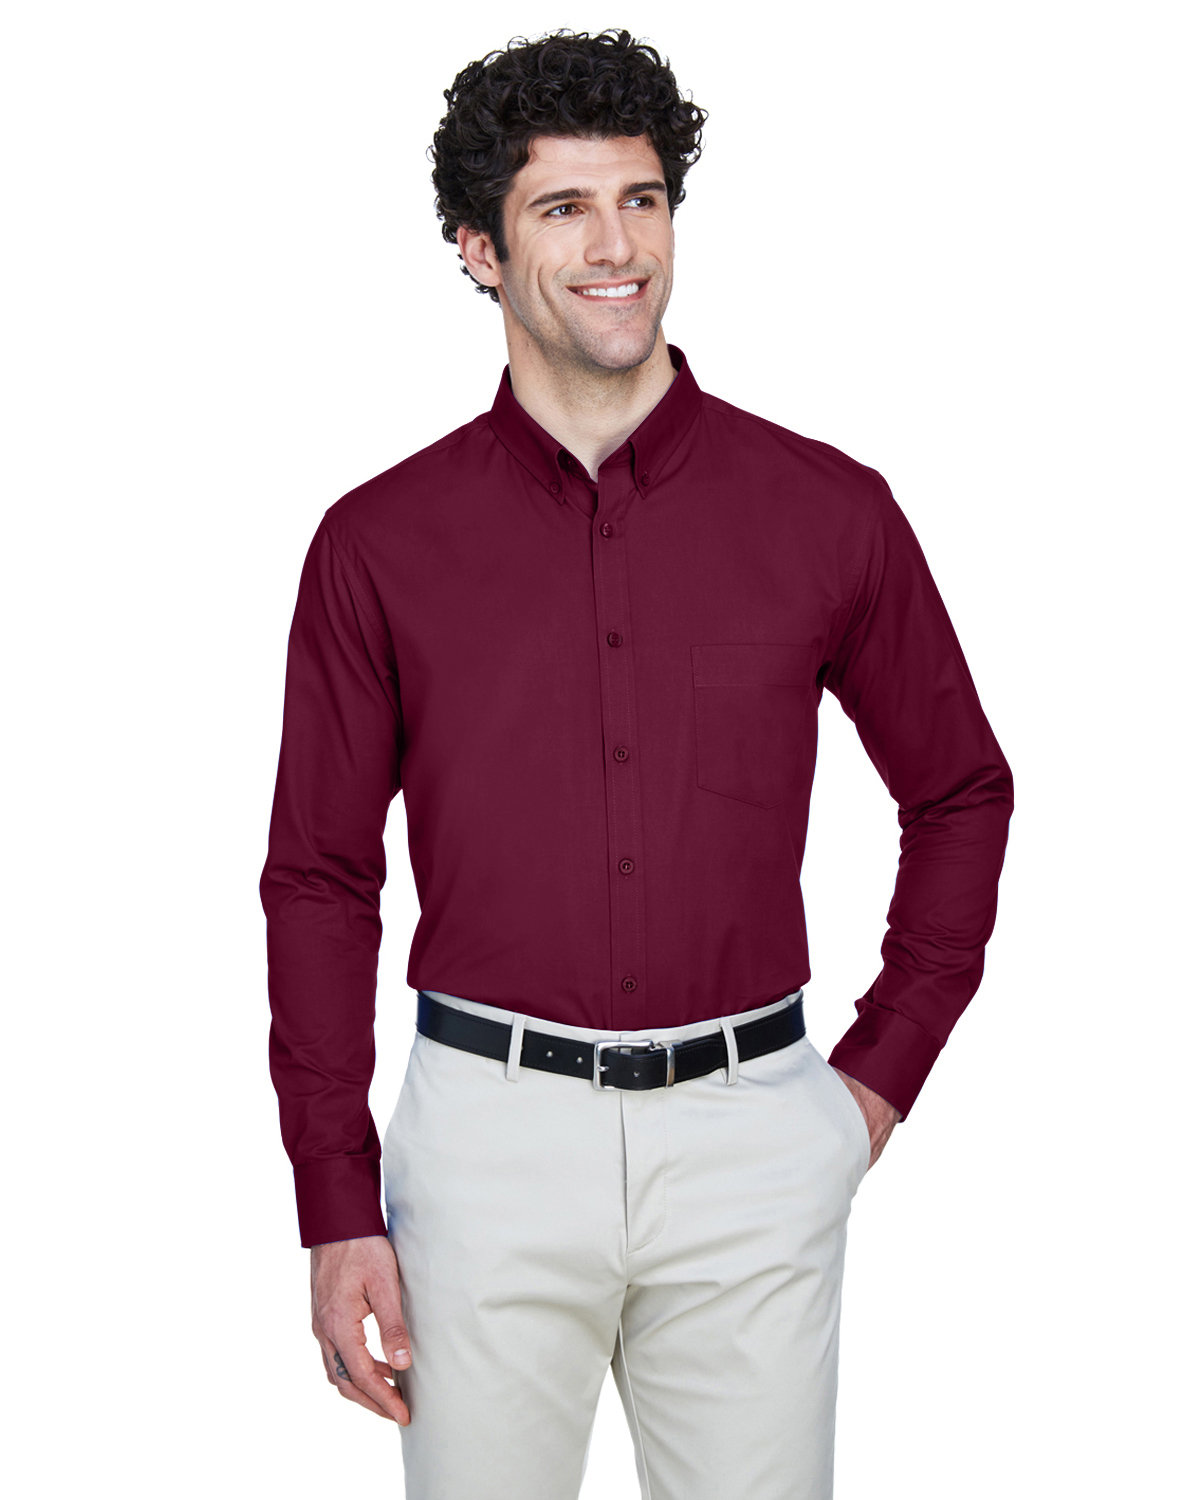 Core 365 Men's Operate Long-Sleeve Twill Shirt BURGUNDY 